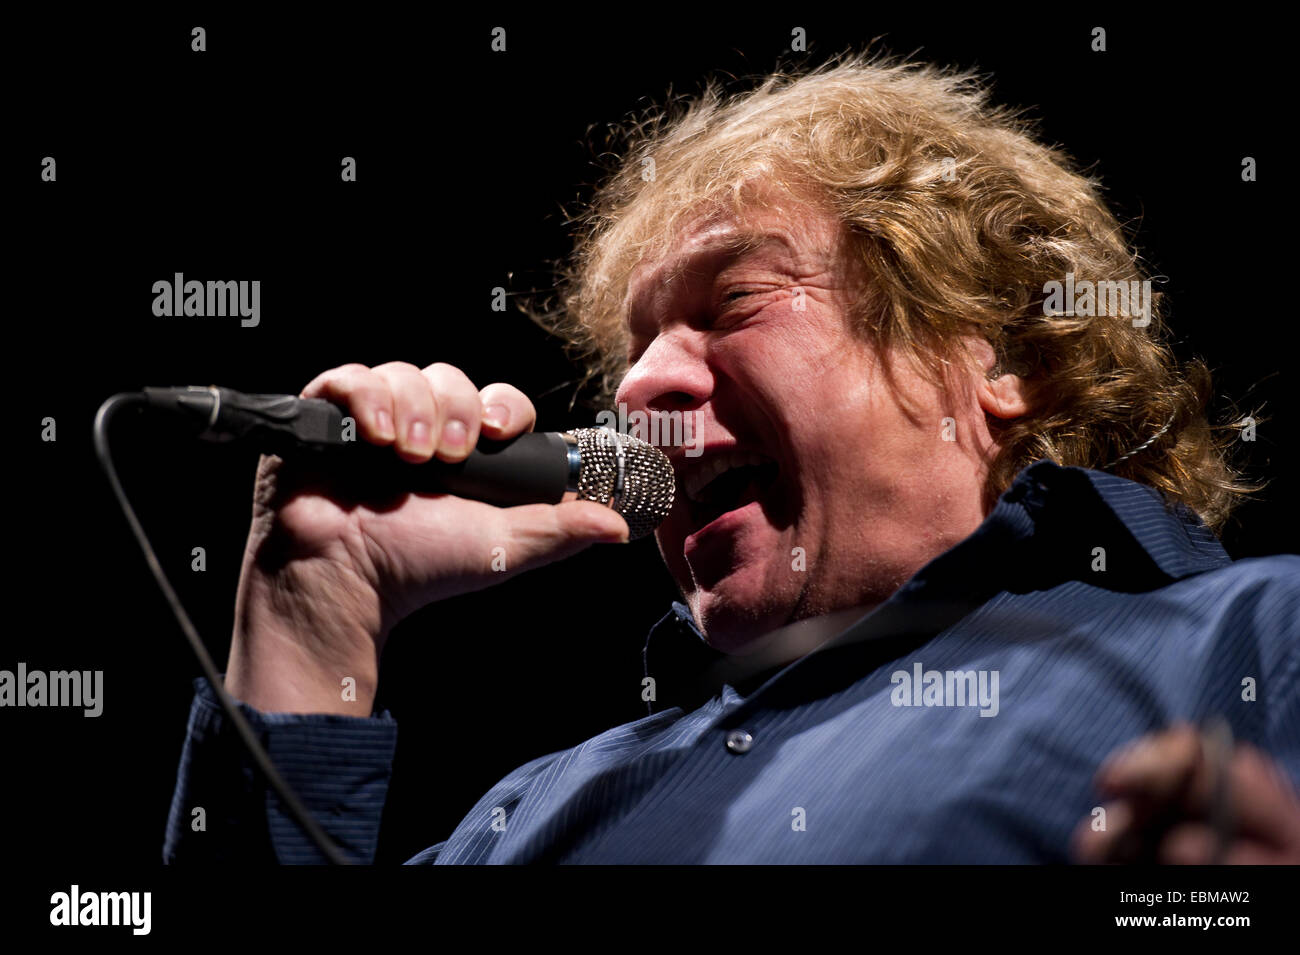 Freiburg, Germania. 2 dicembre, 2014. Lou Gramm (straniero) suona dal vivo a Rothaus Arena. Foto: Miroslav Dakov/ Alamy Live News Foto Stock